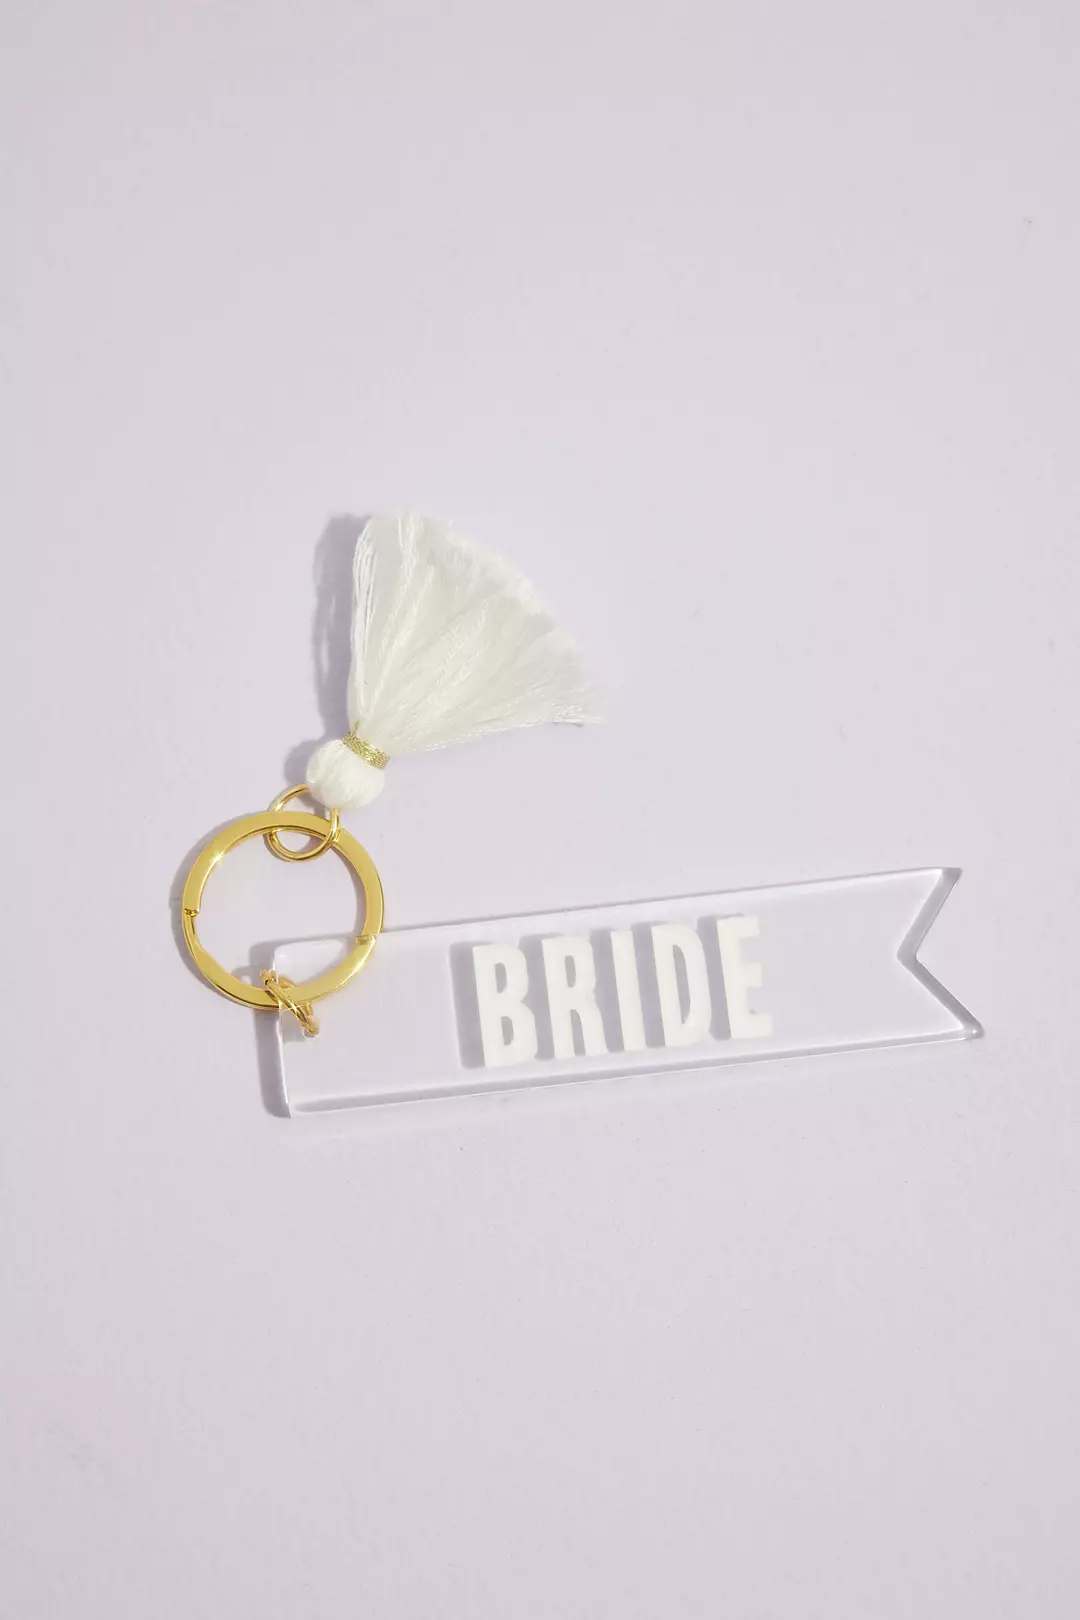 Acrylic Bride Keychain with Tassel Image